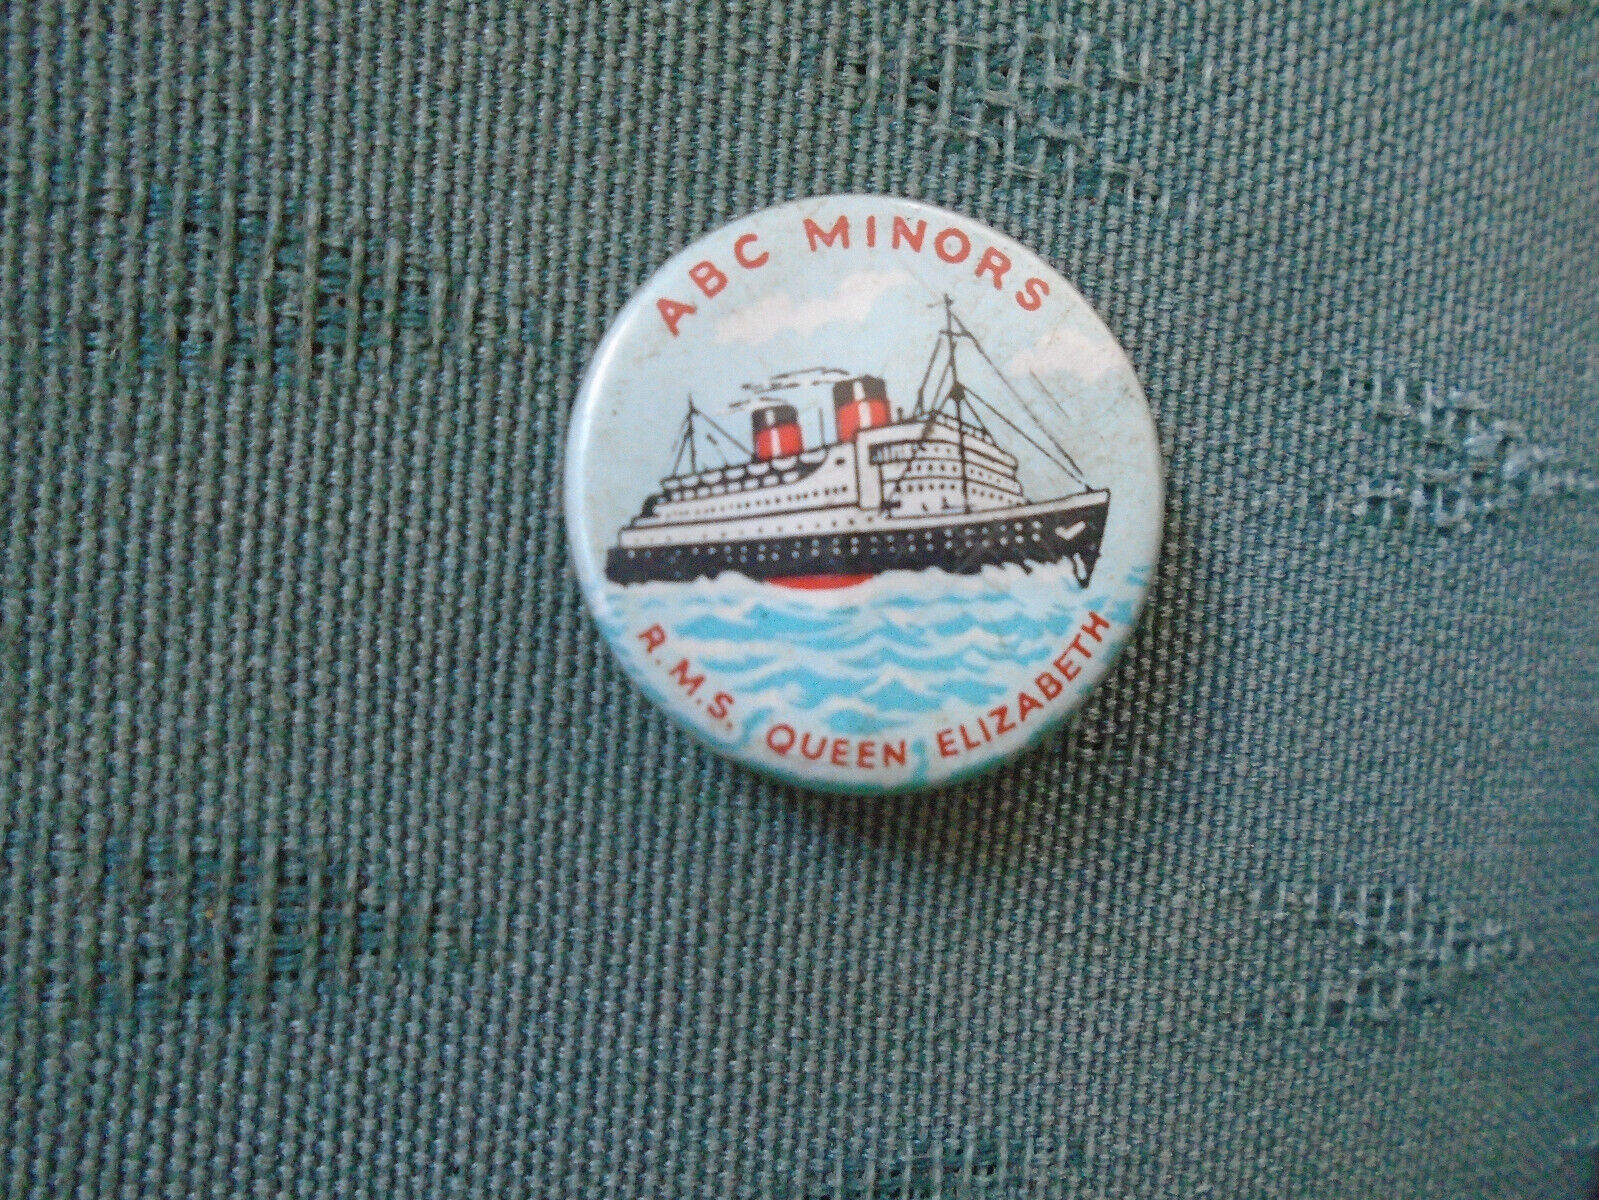 OLD ABC MINORS CINEMA CHILDRENS CLUB R.M.S. QUIEEN ELIZABETH SHIP BUTTON BADGE